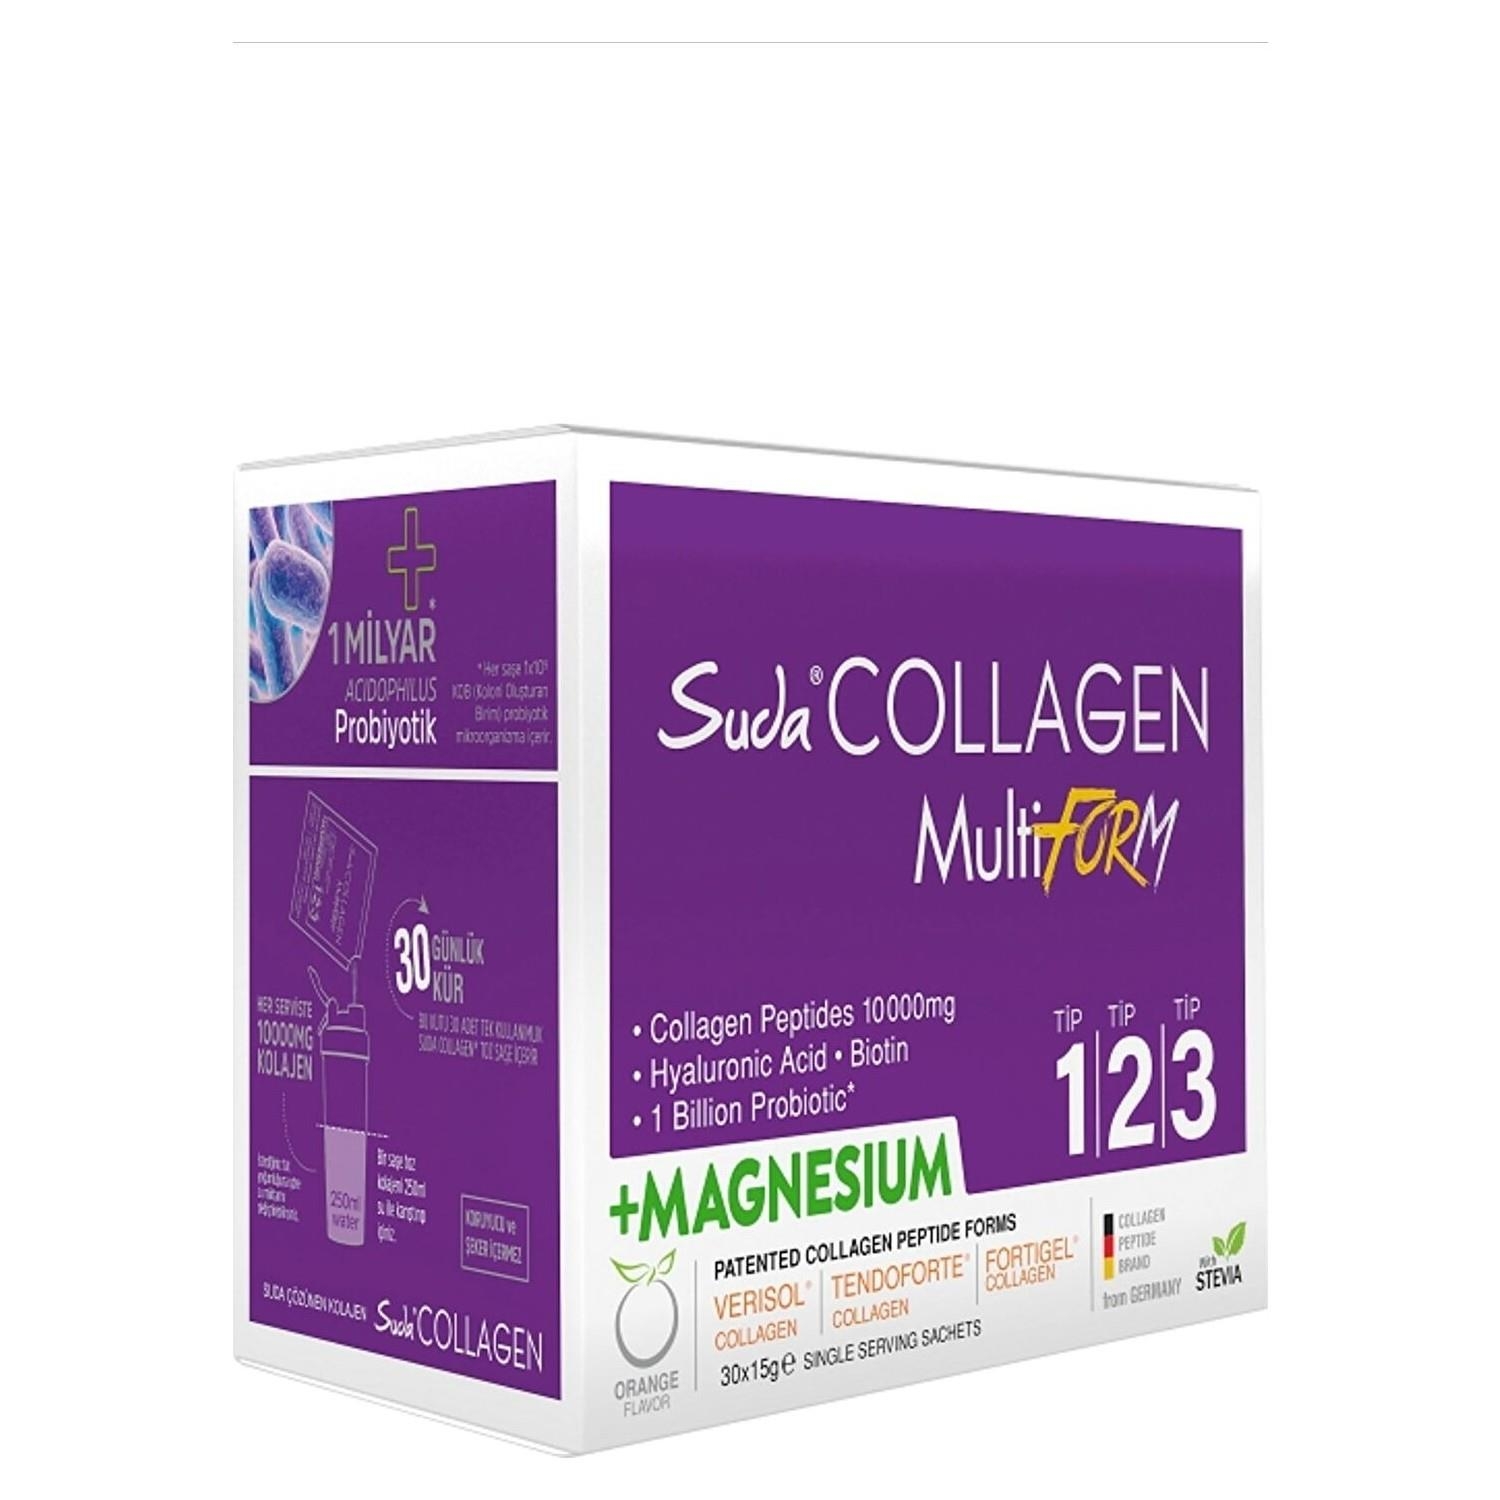 Suda Collagen Multi form. Suda Collagen Multiform 90 Tablets. Коллаген suda Multiform. Коллаген suda Турция Multiform.